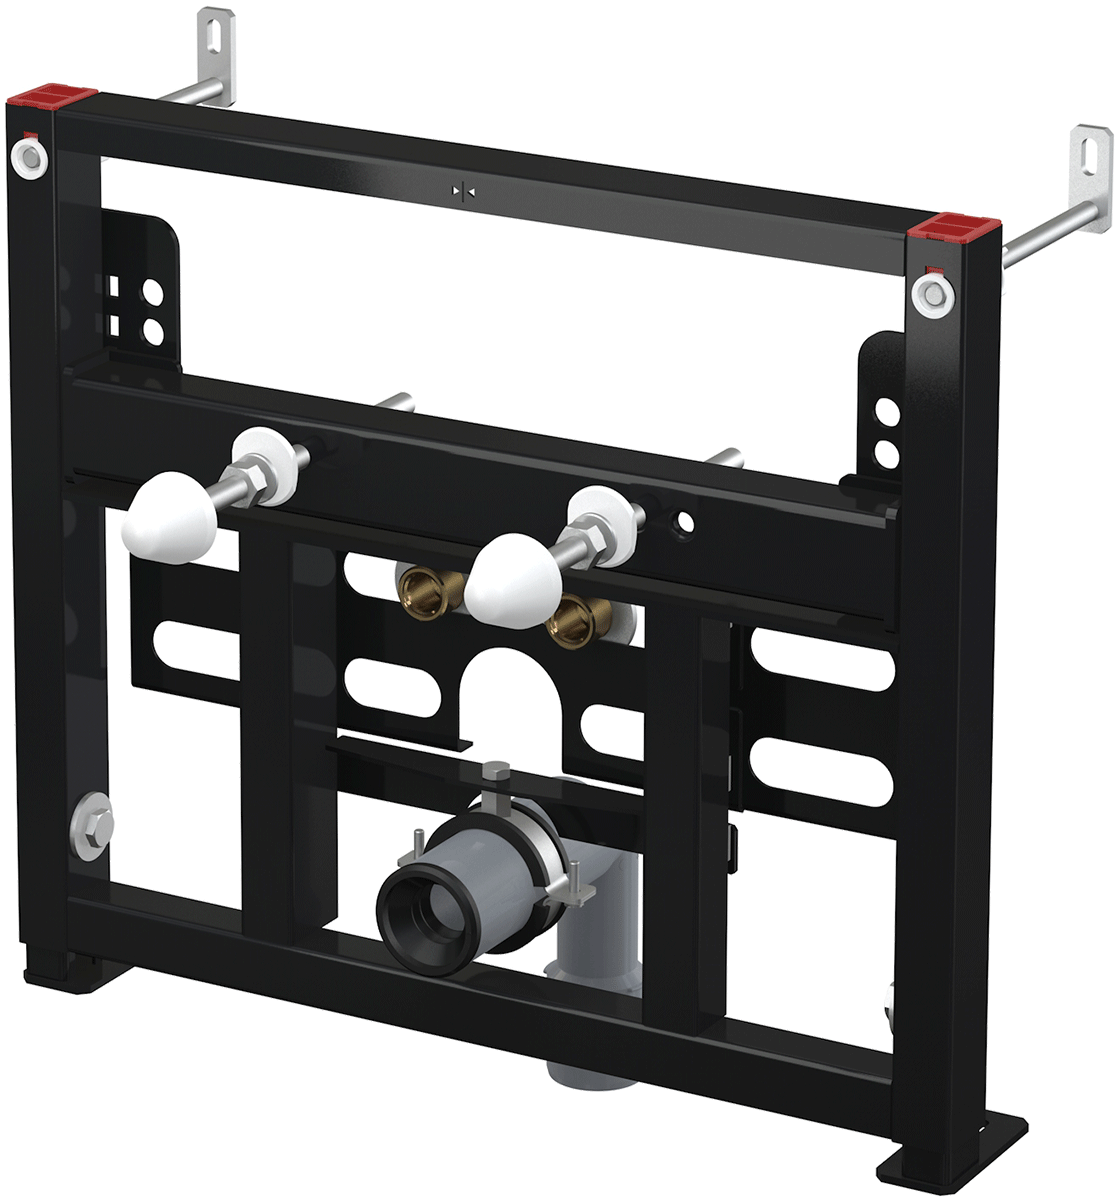 A105/450 - Mounting frame for bidet 